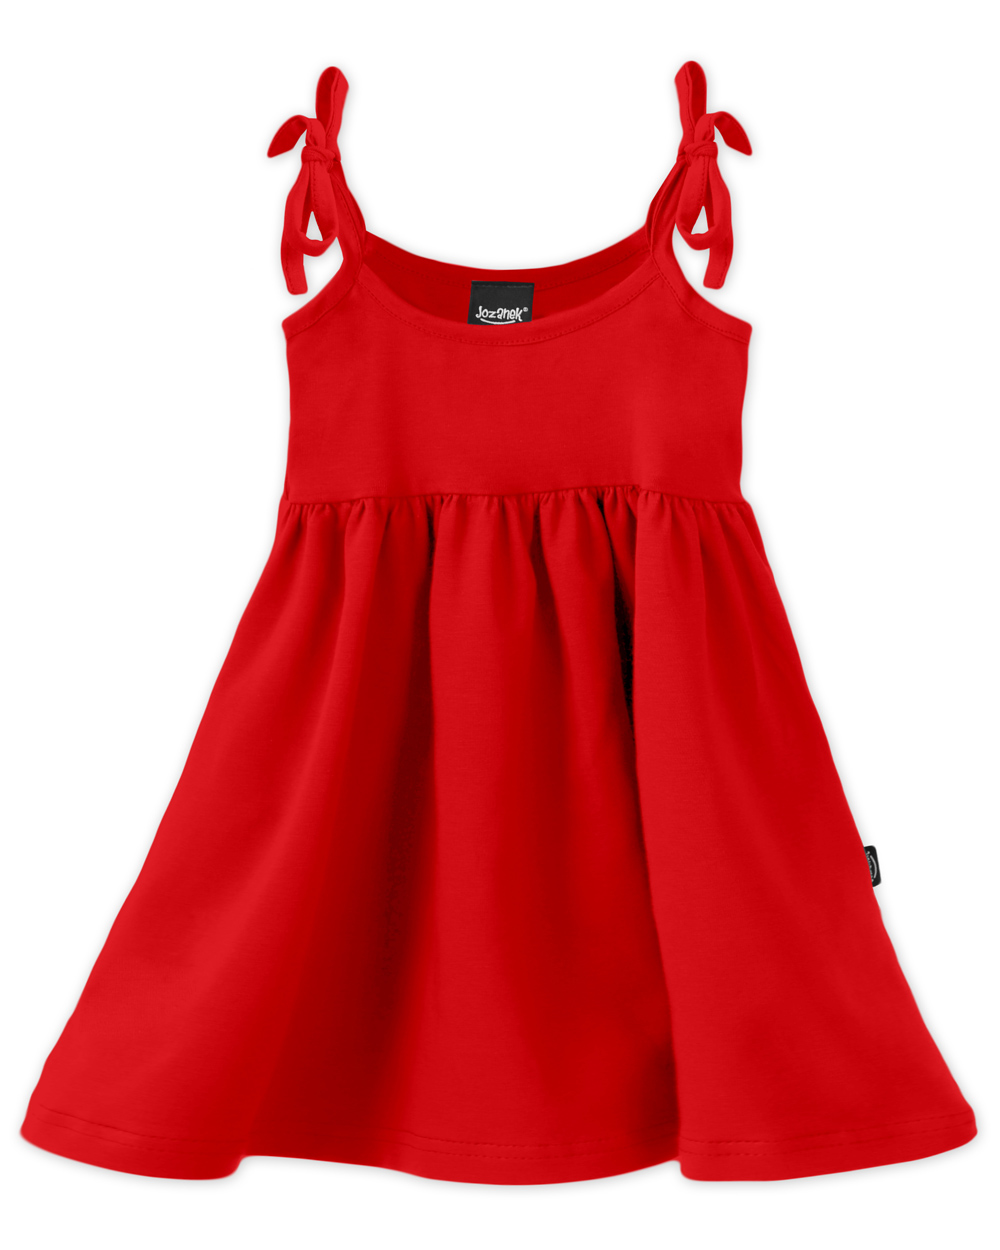 Children’s dresses, tying on shoulders, red